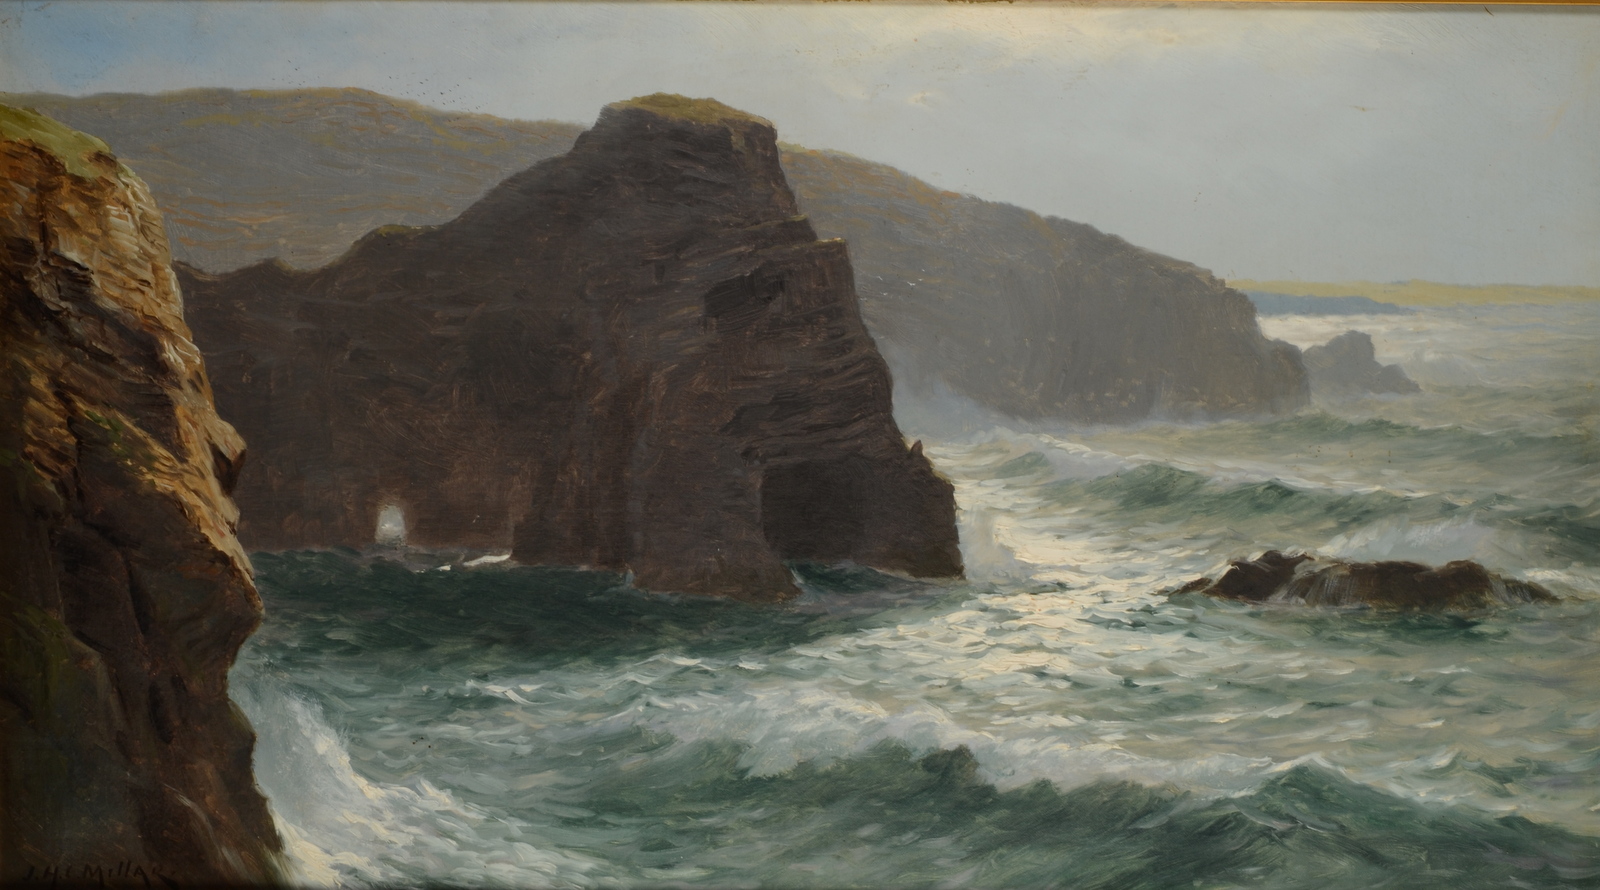 JAMES H C MILLAR Coastal Scene Oil on canvas Signed Label on the reverse 80 x 45cm